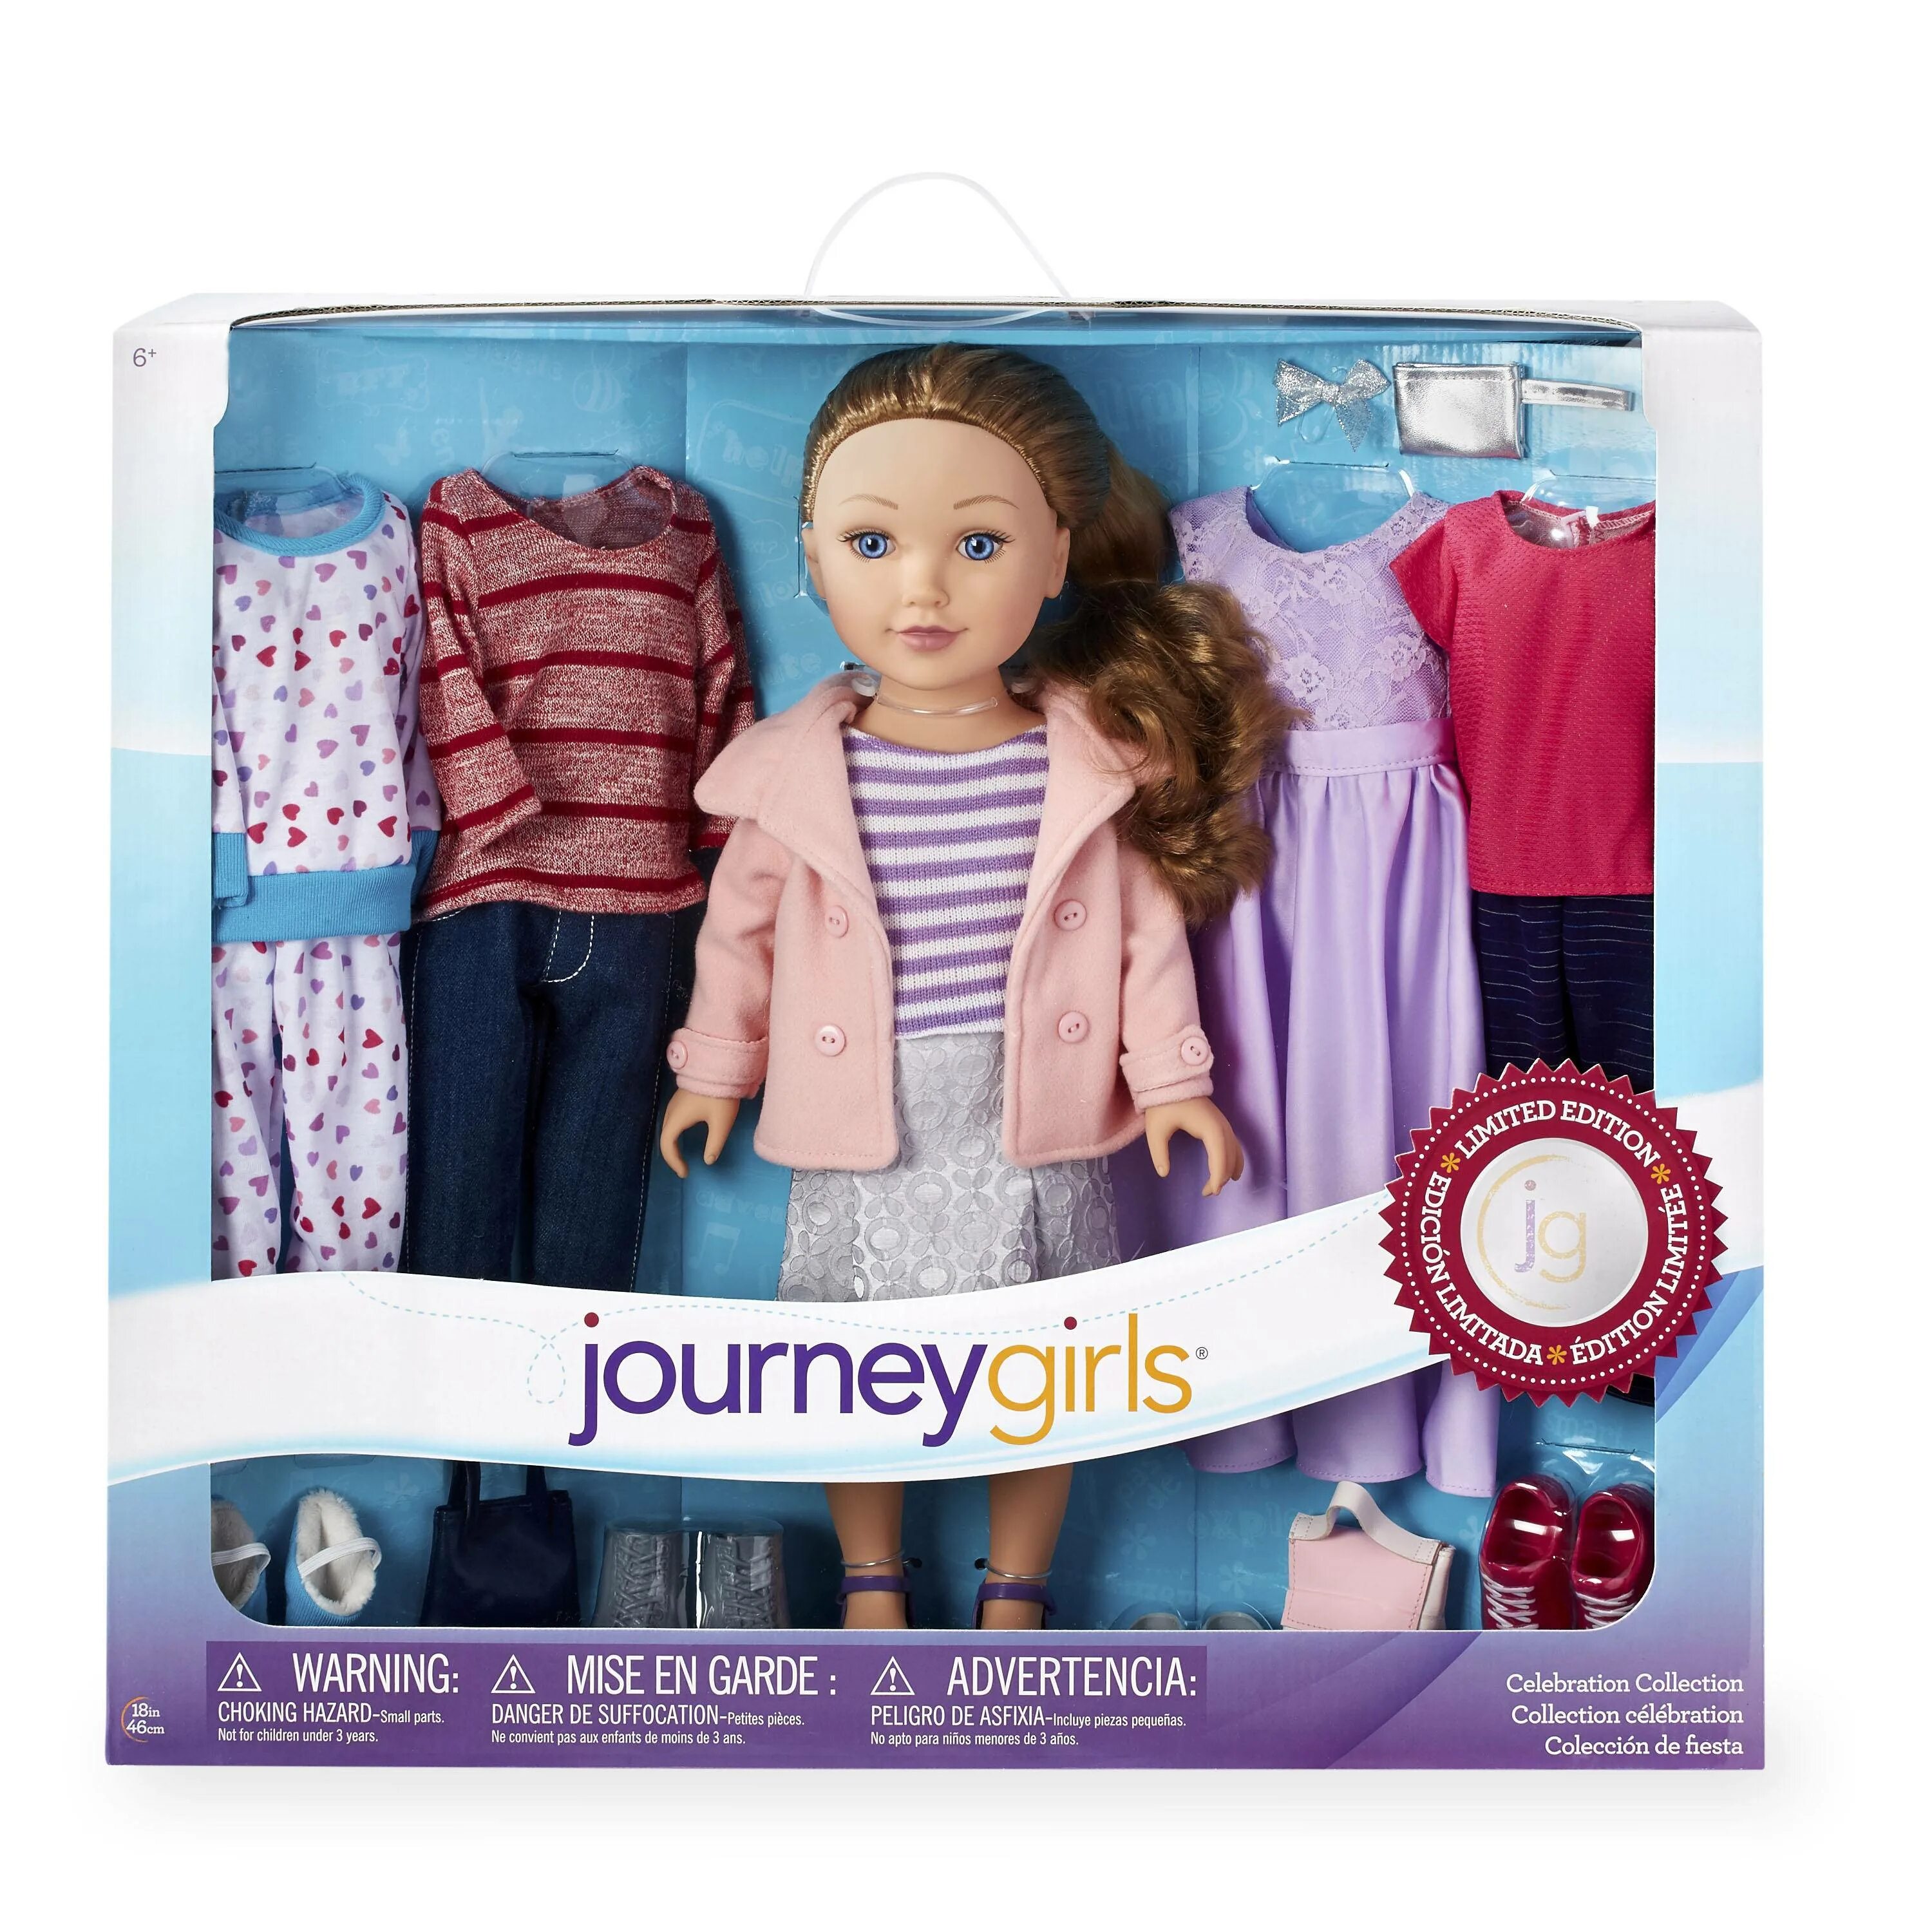 Journey girls. Куклы Джорни герлз. Journey girls куклы. Набор одежды Journey girls.